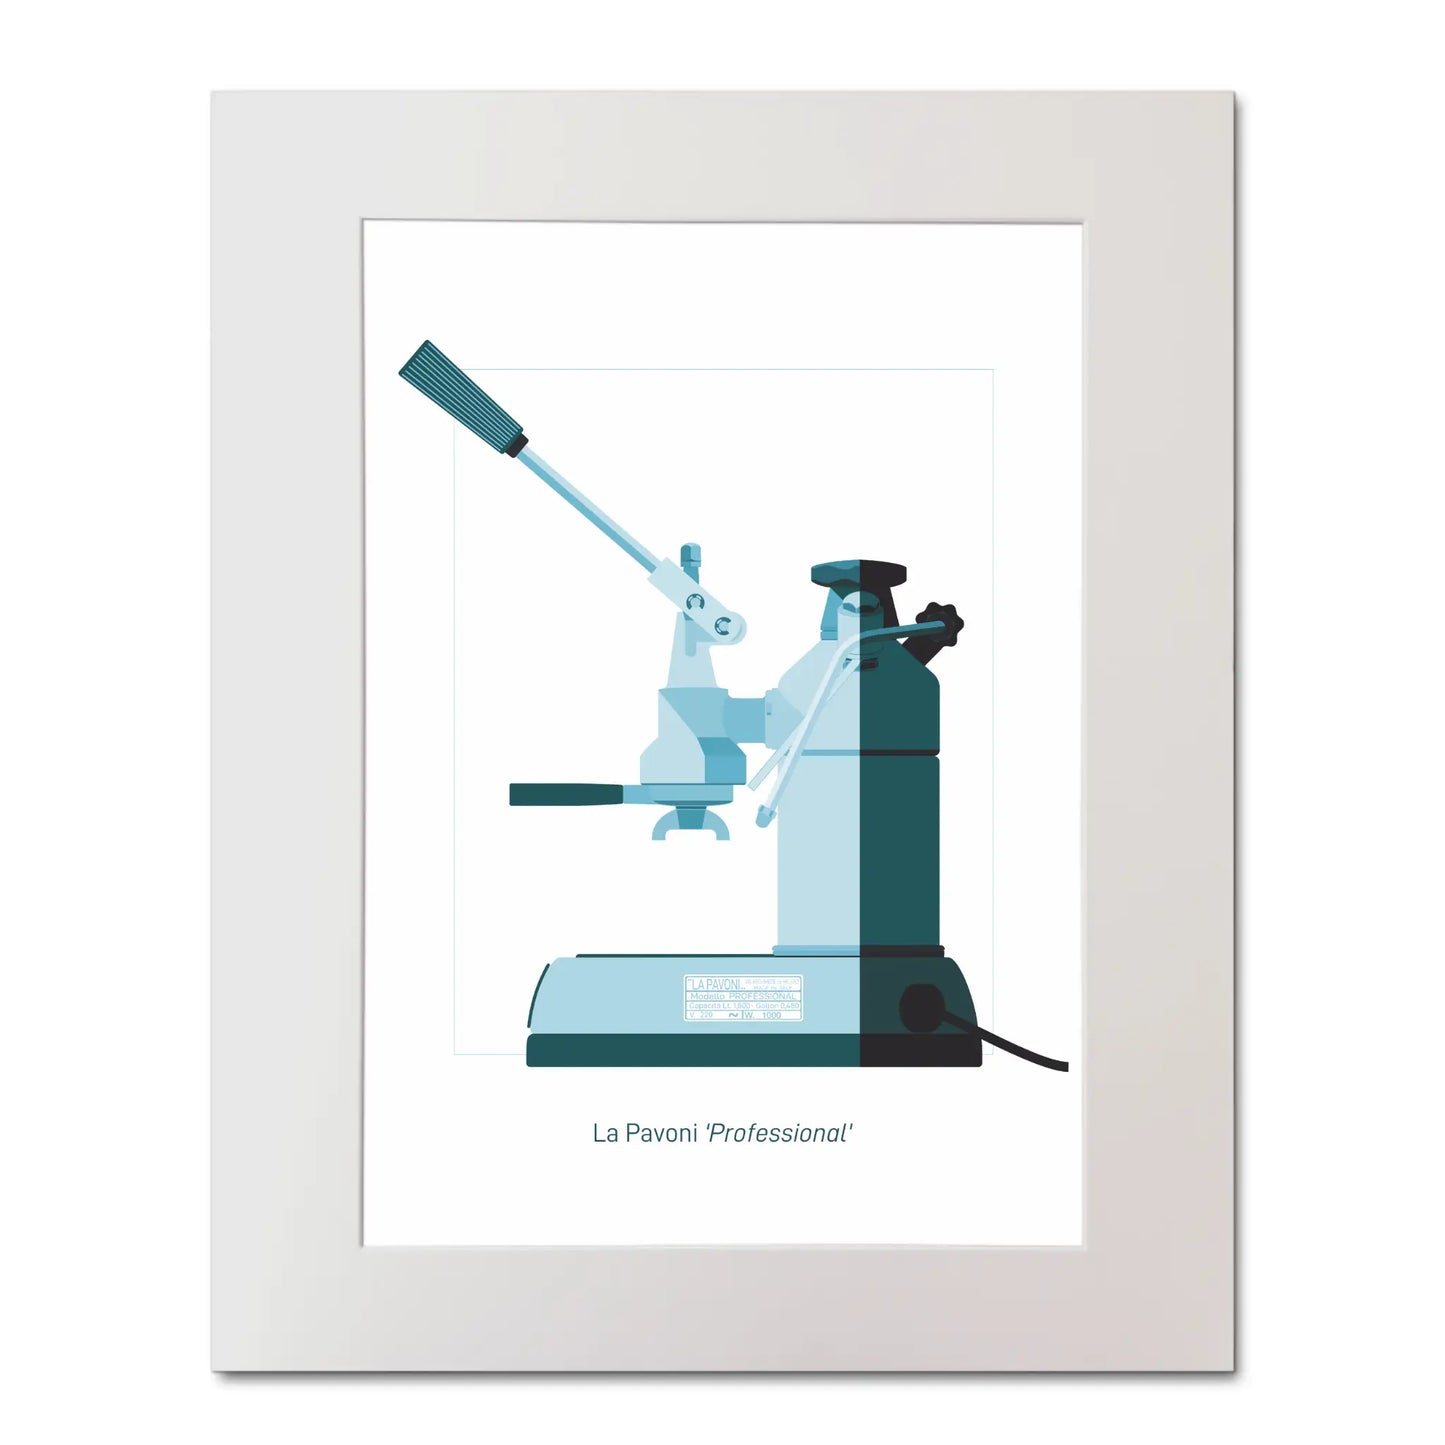 Framed art print of a La Pavoni lever espresso coffee machine, side view in aqua blue